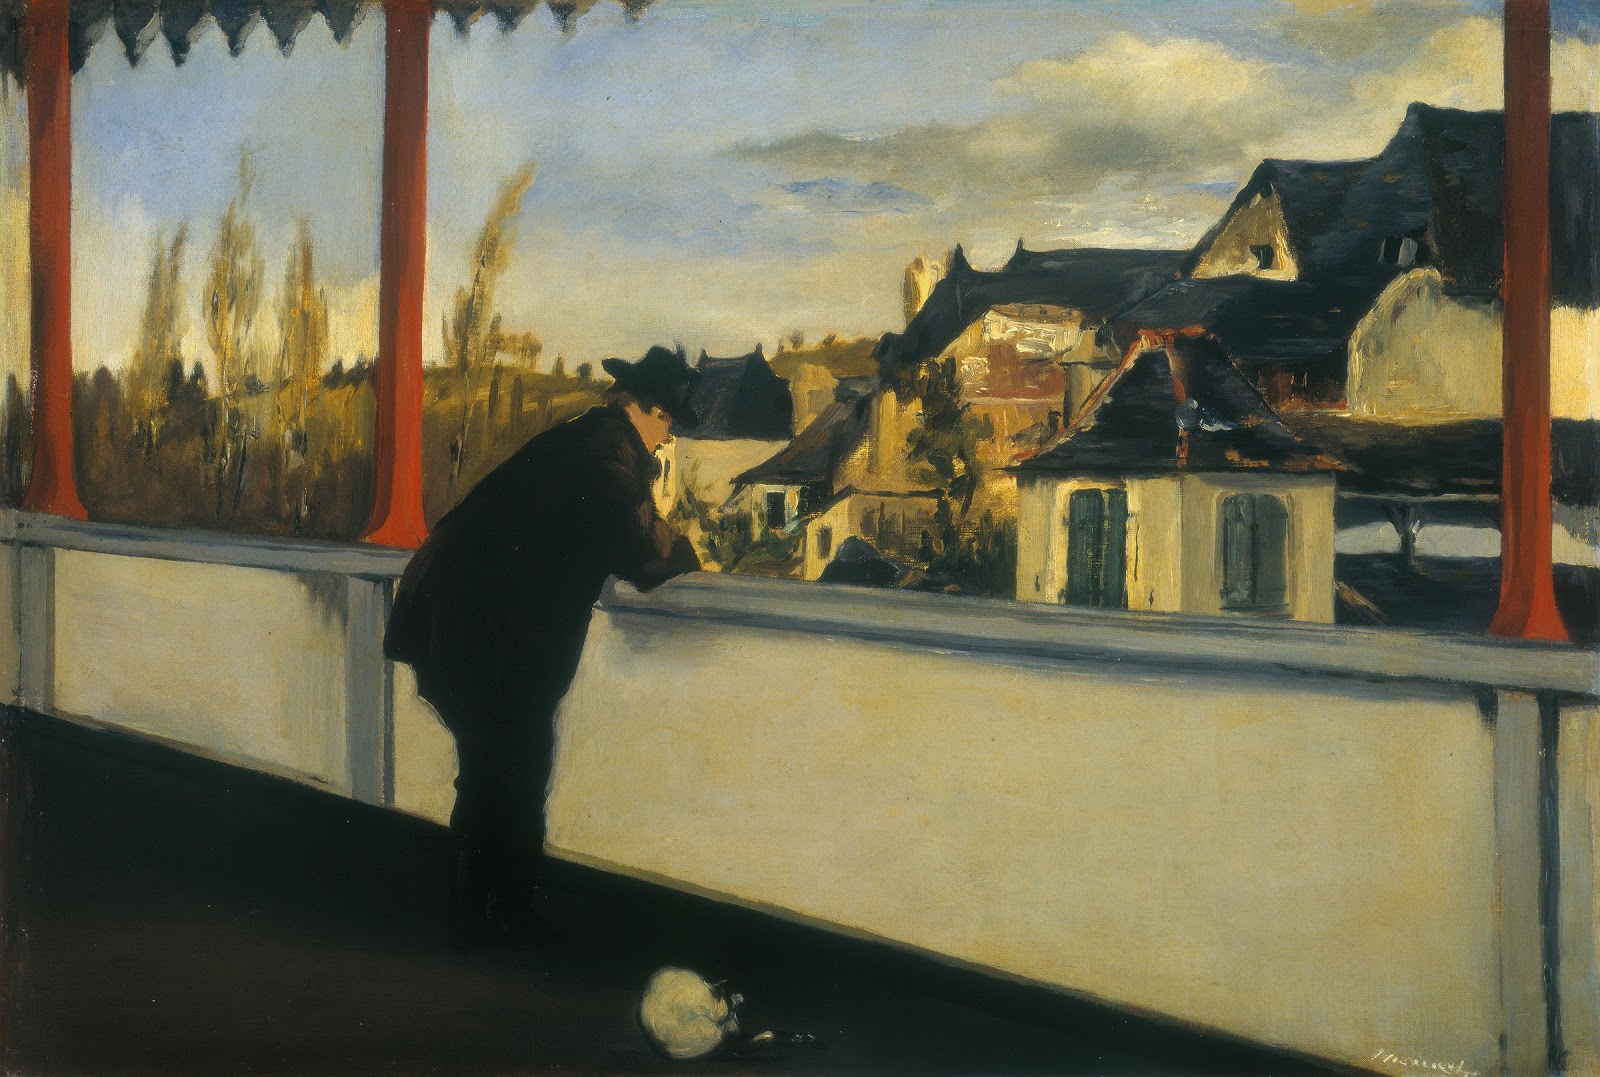 Edouard+Manet-1832-1883 (174).jpg